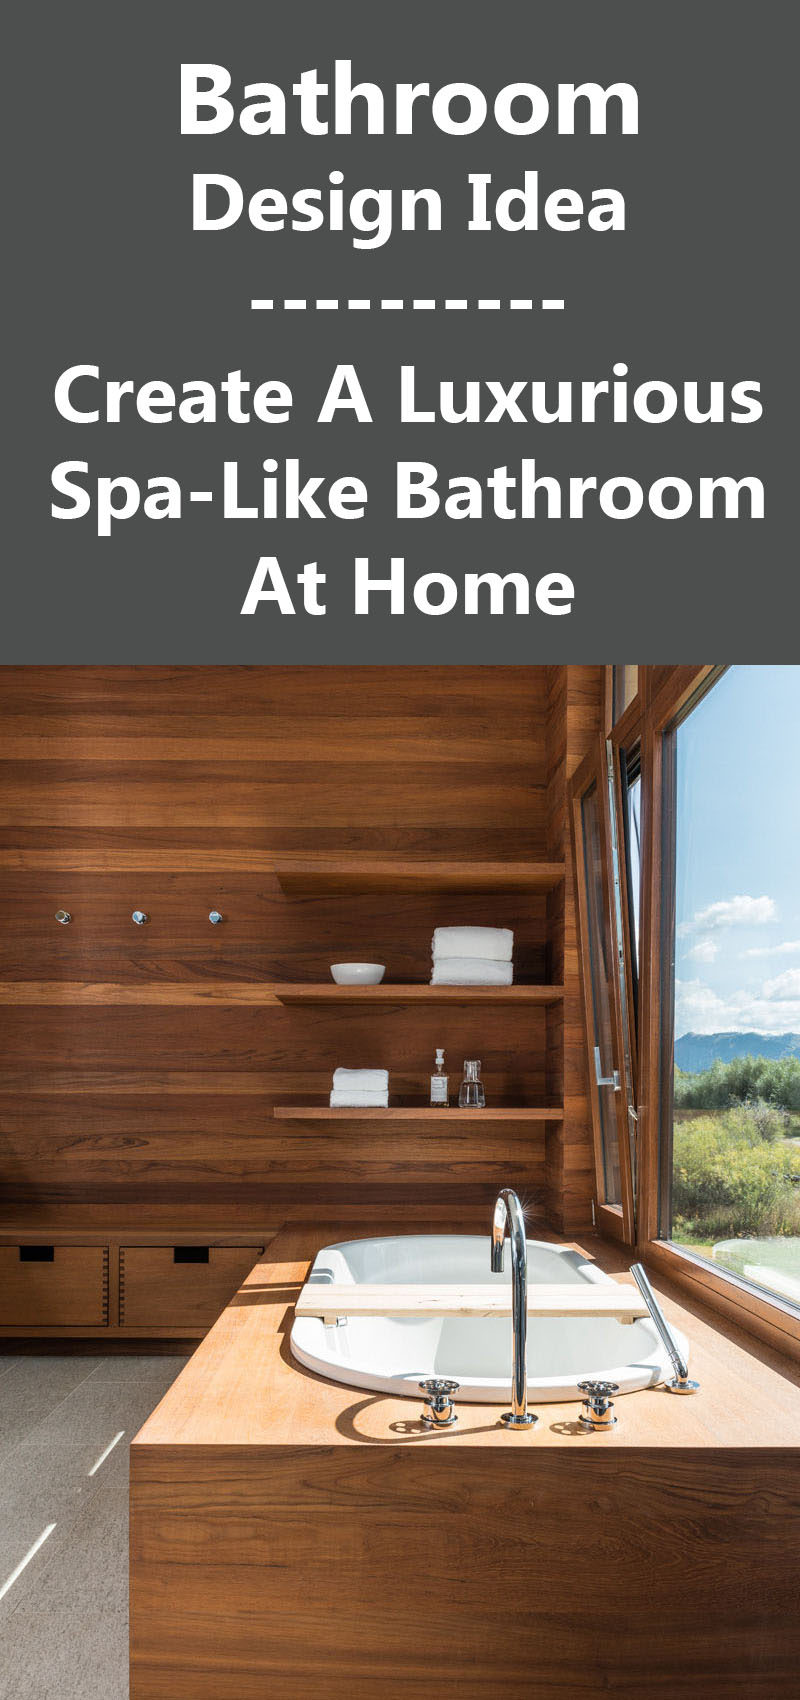 Bathroom Design Idea - Create a Luxurious Spa-Like Bathroom At Home